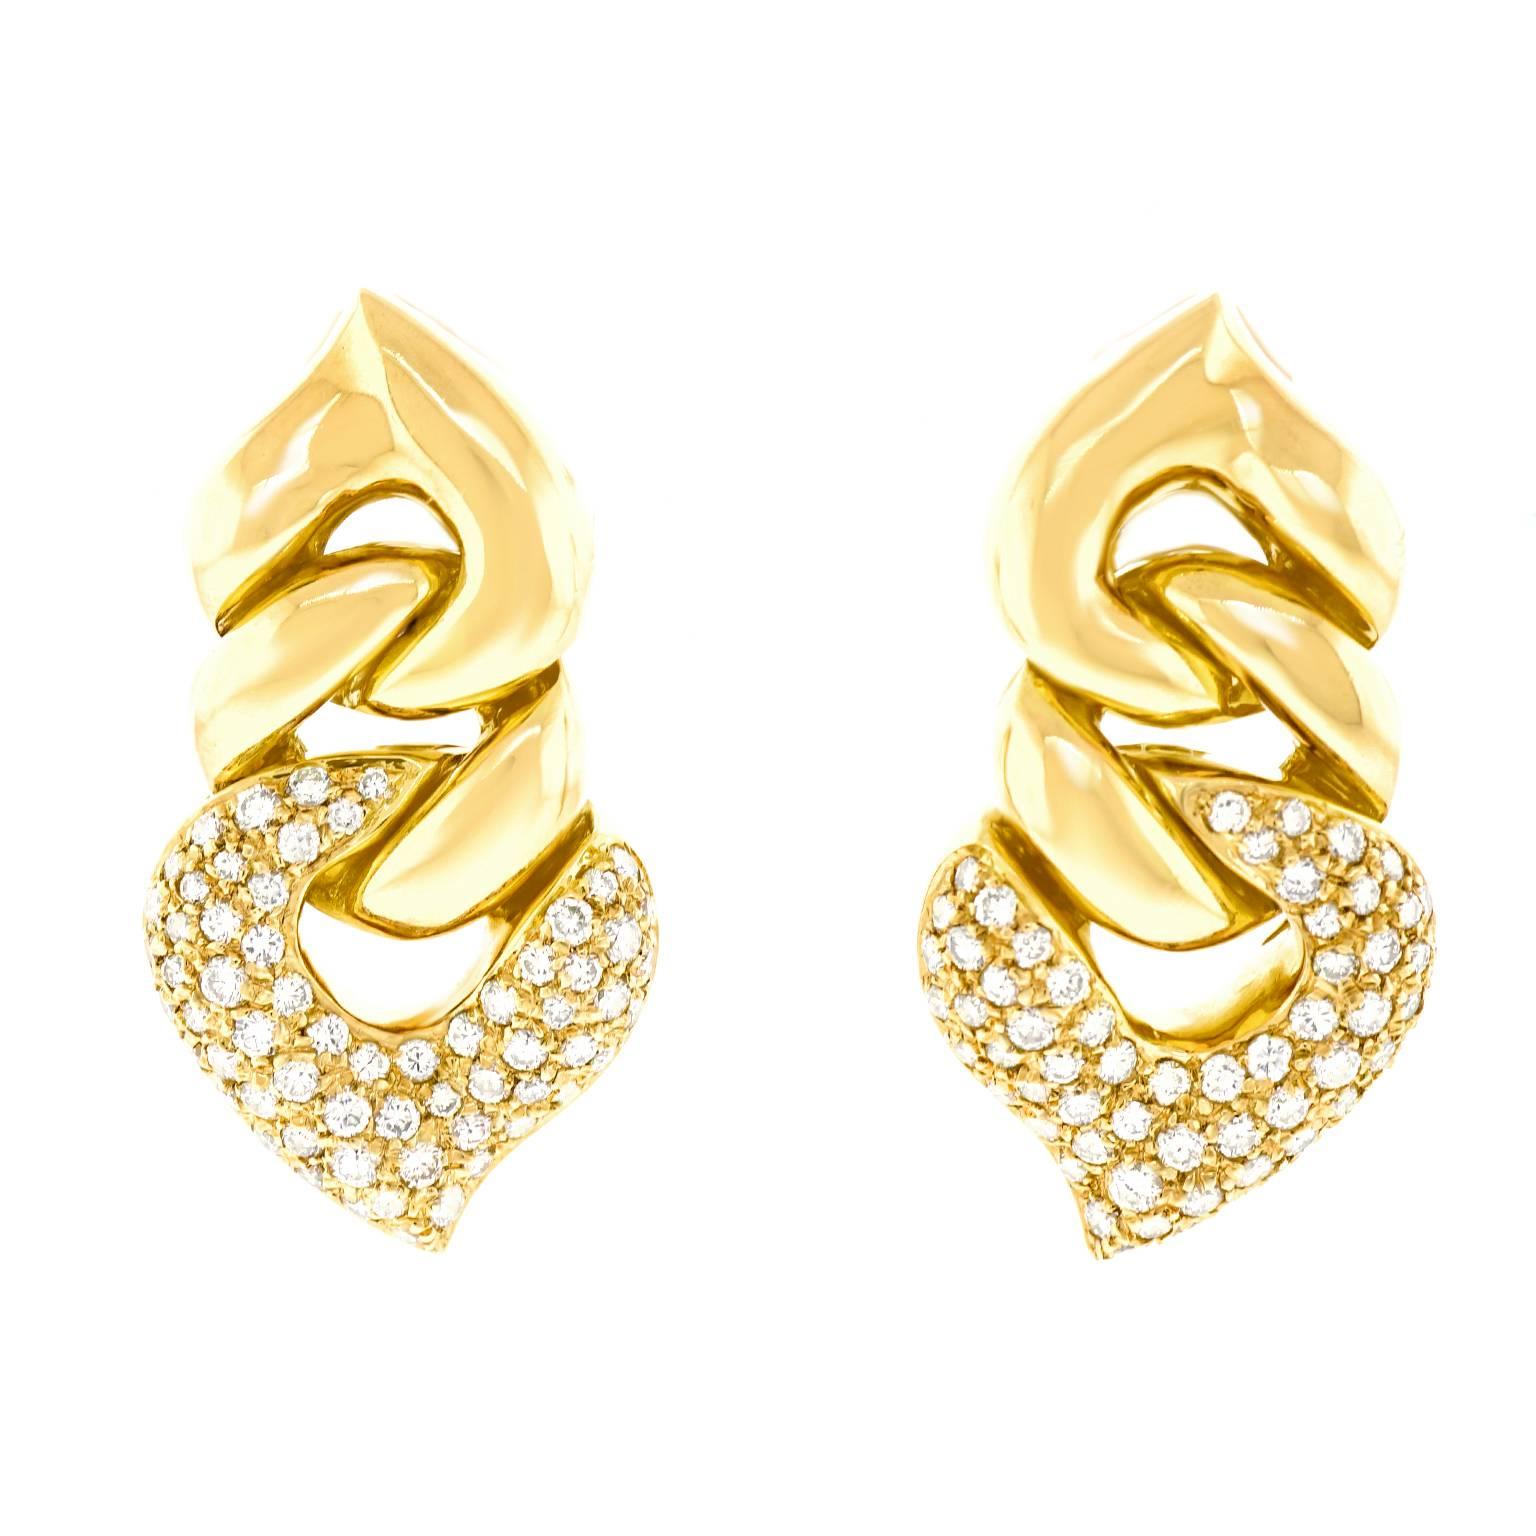 Bulgari “Doppio Cuore” Diamond and Gold Earrings